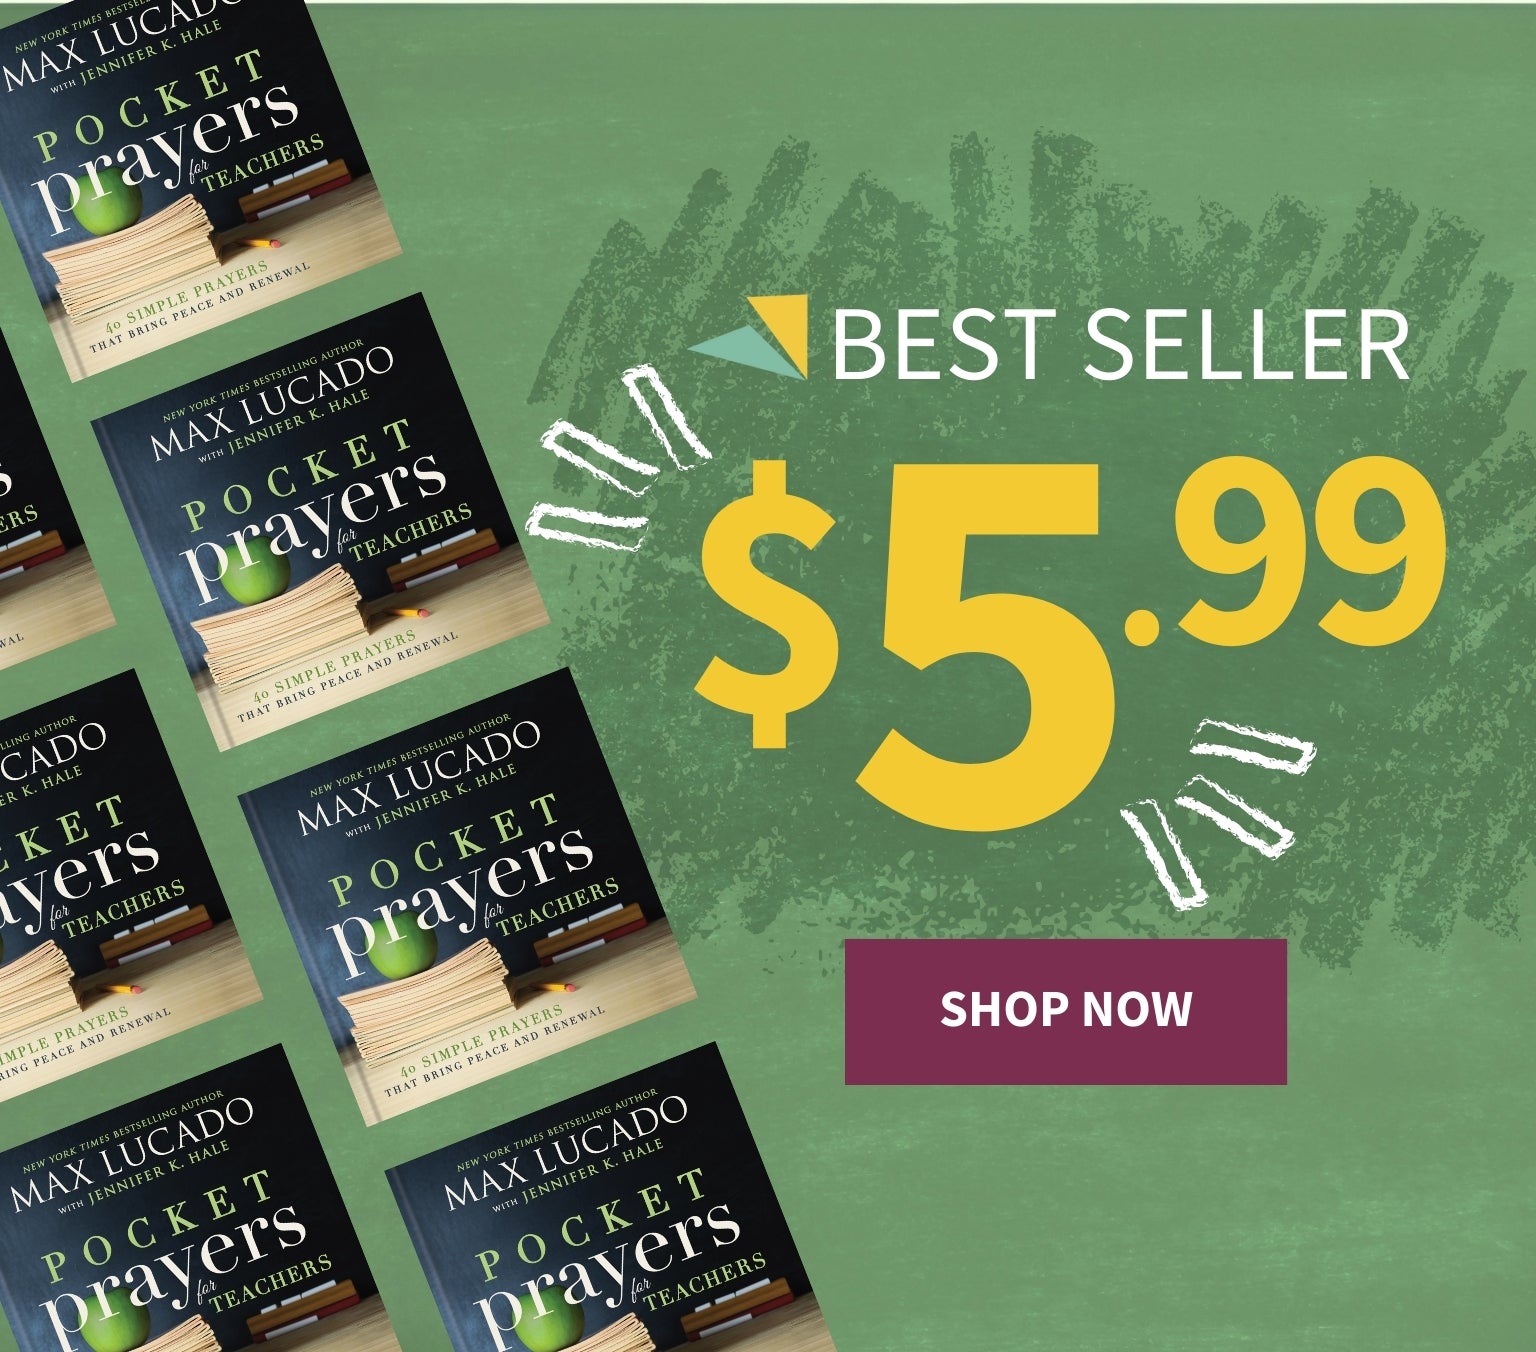 Pocket Prayers for Teachers by Max Lucado - Best Seller $5.99 Shop Now